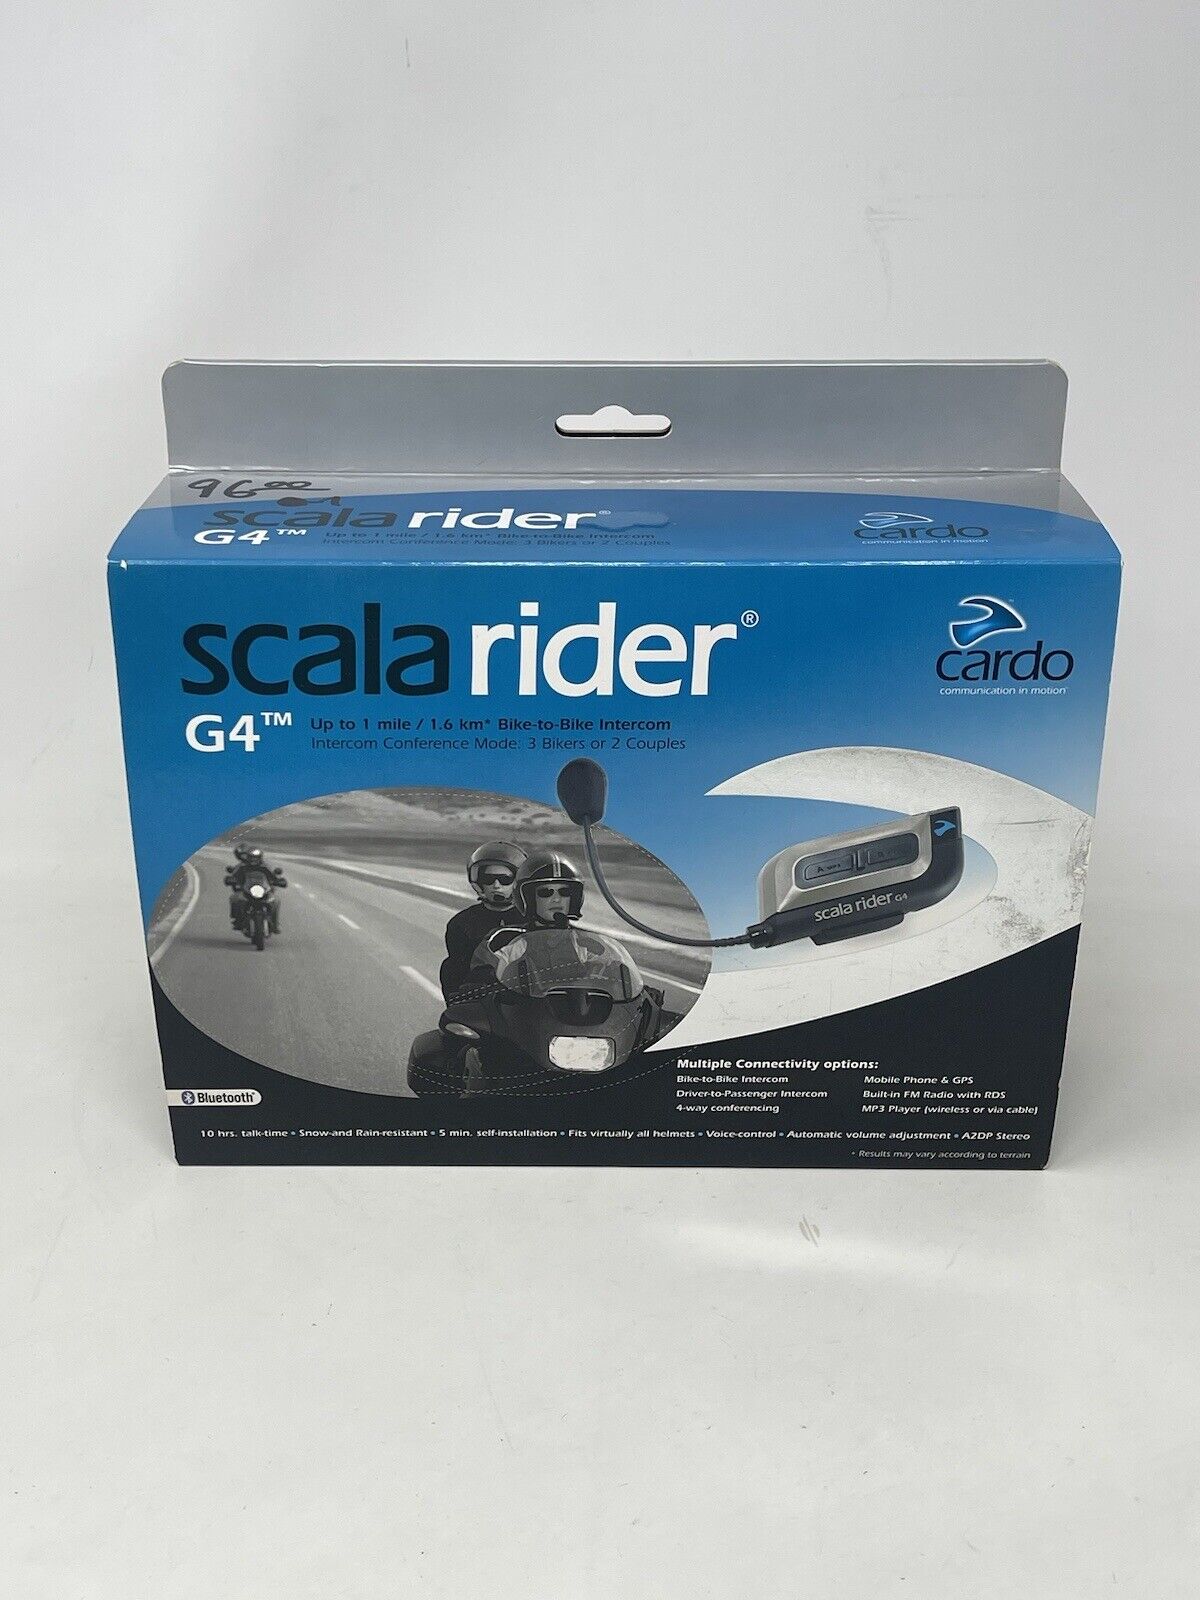 Cardo Scala Rider G4 PowerSet Intercom Communication Wireless Helmet Audio Used